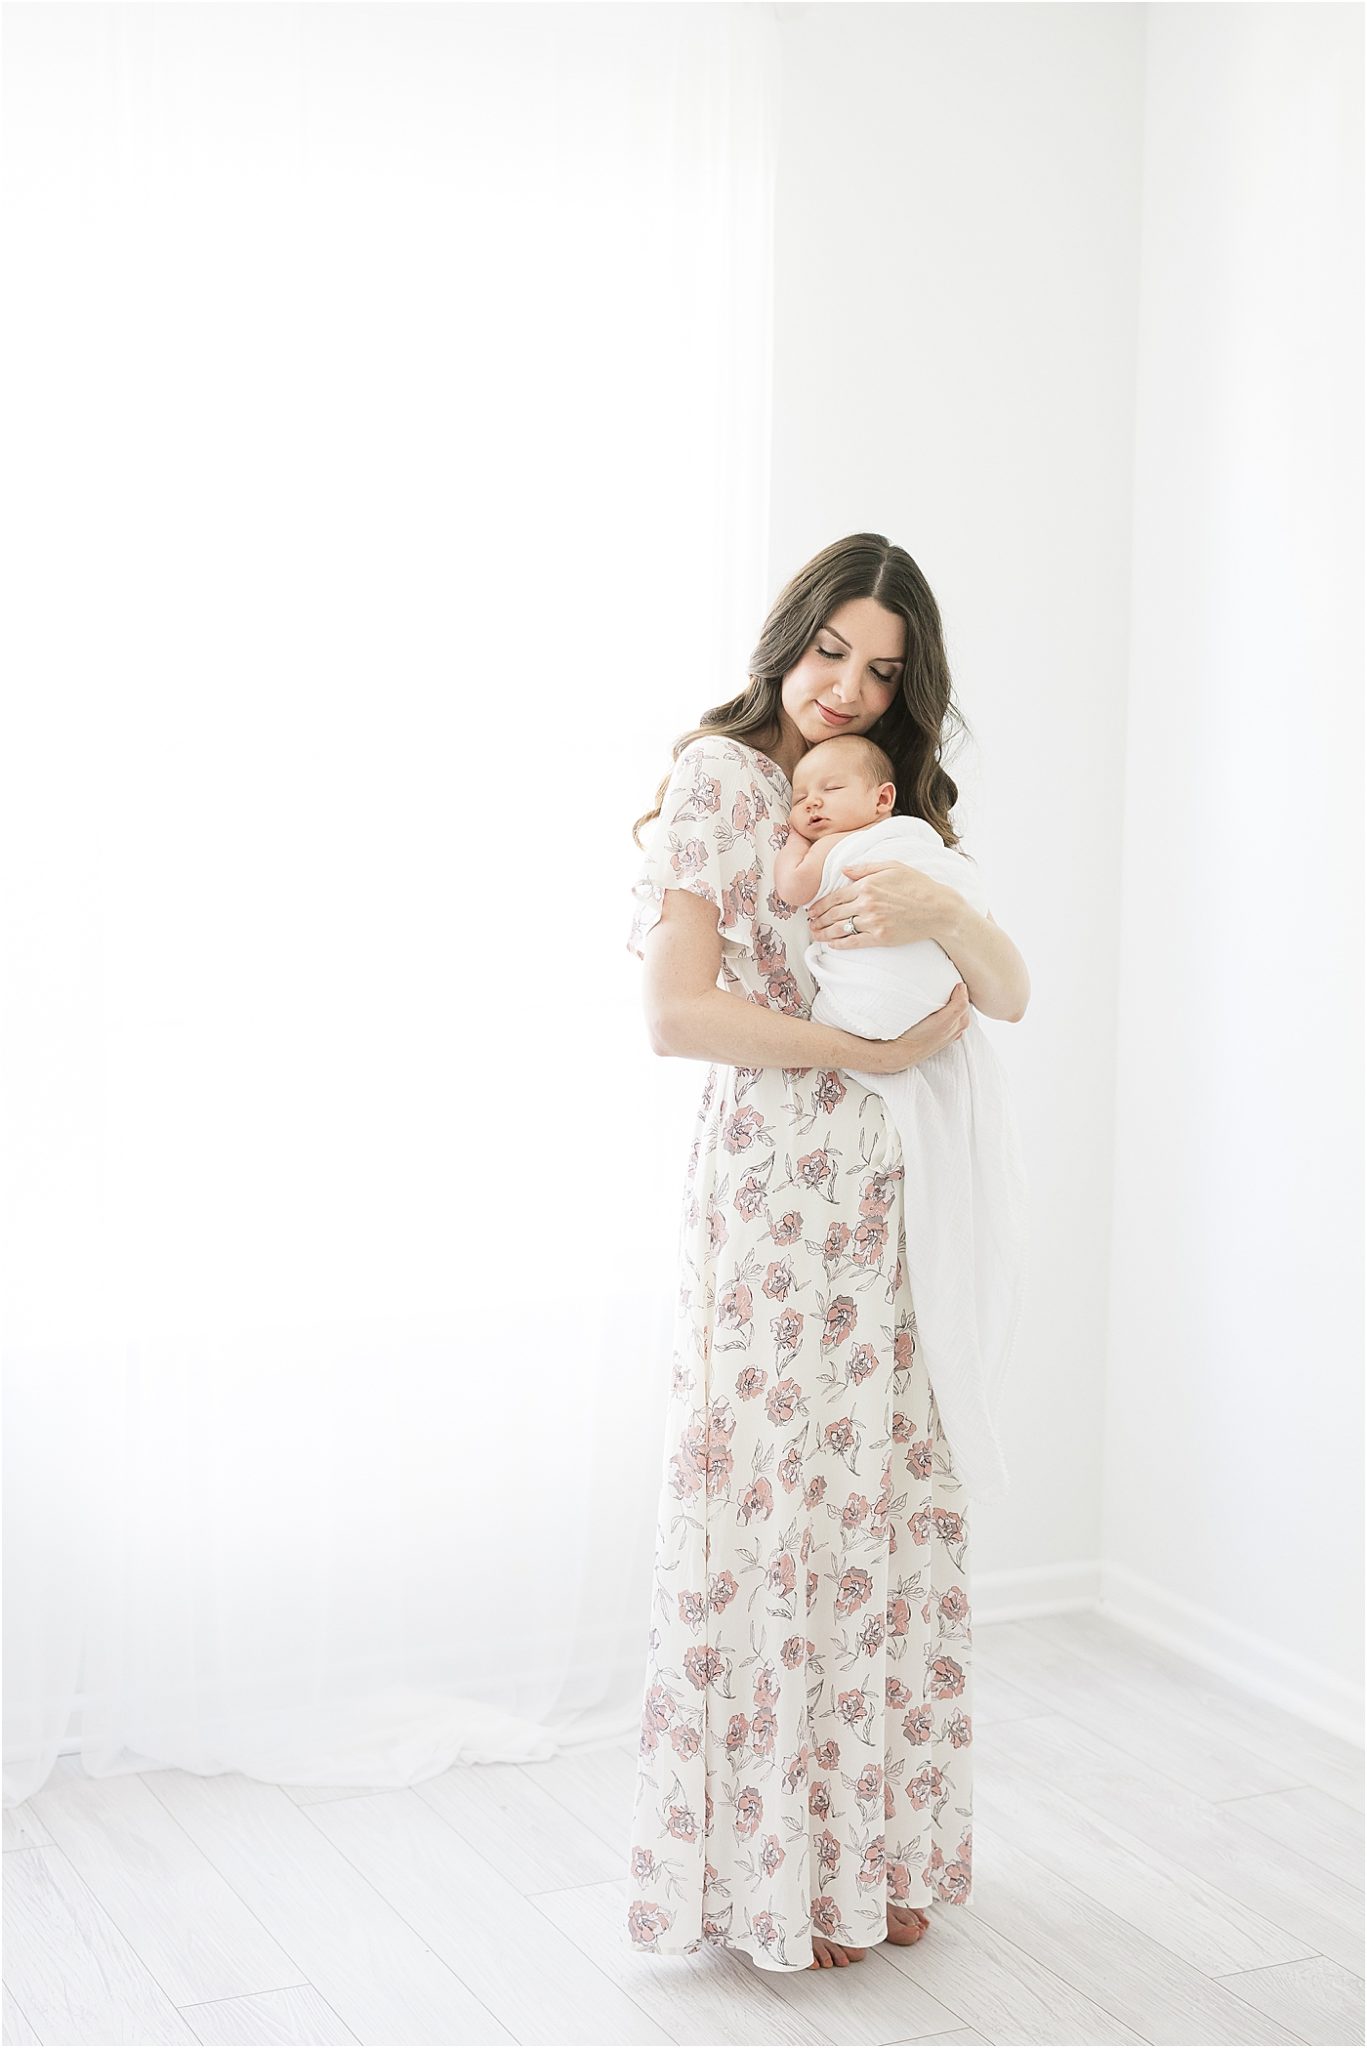 Mom holding her newborn baby boy | Lindsay Konopa Photography